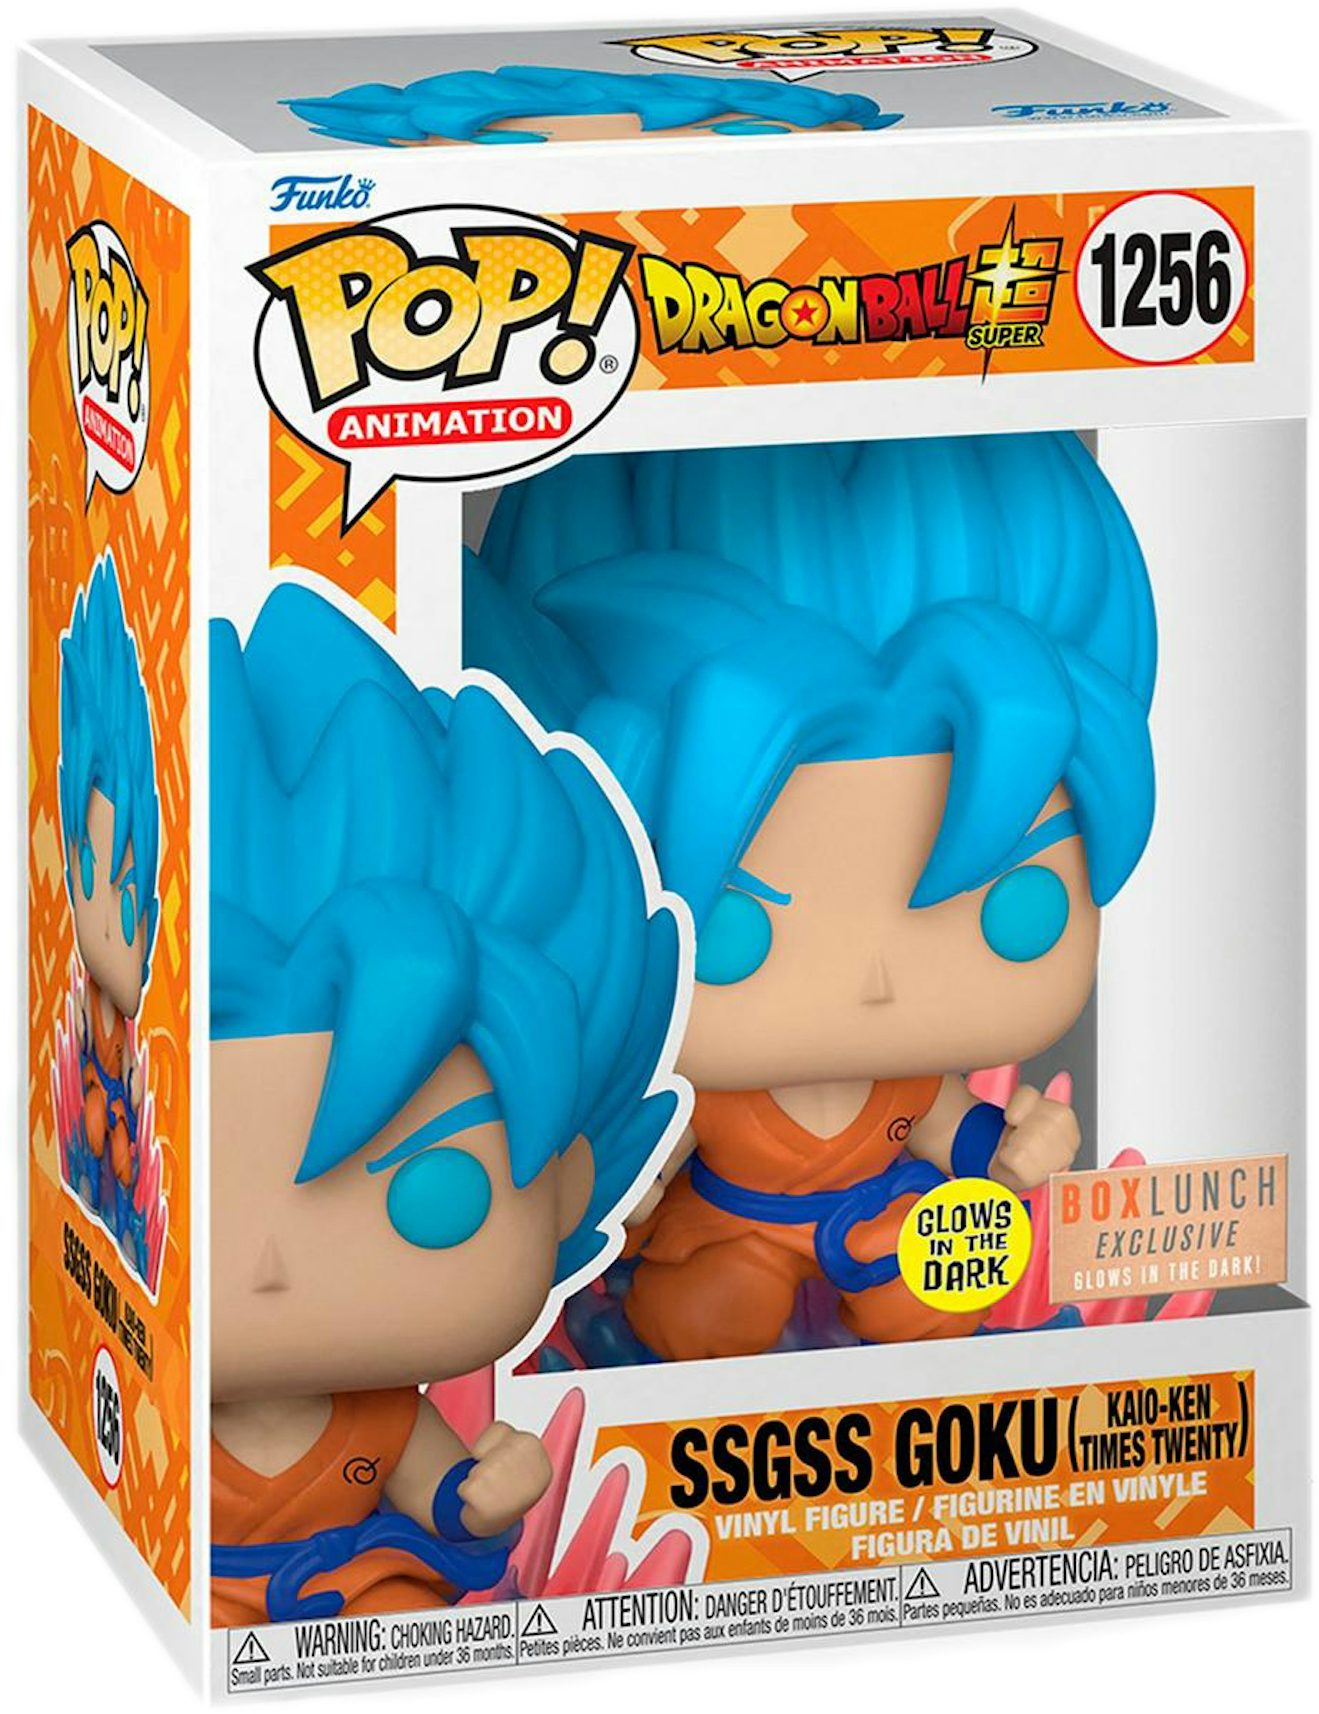 https://images.stockx.com/images/Funko-Pop-Animation-Dragon-Ball-Z-SSGSS-Goku-Kaio-Ken-Times-Twenty-GITD-Box-Lunch-Exclusive-Figure-1256.jpg?fit=fill&bg=FFFFFF&w=1200&h=857&fm=jpg&auto=compress&dpr=2&trim=color&updated_at=1674265756&q=60